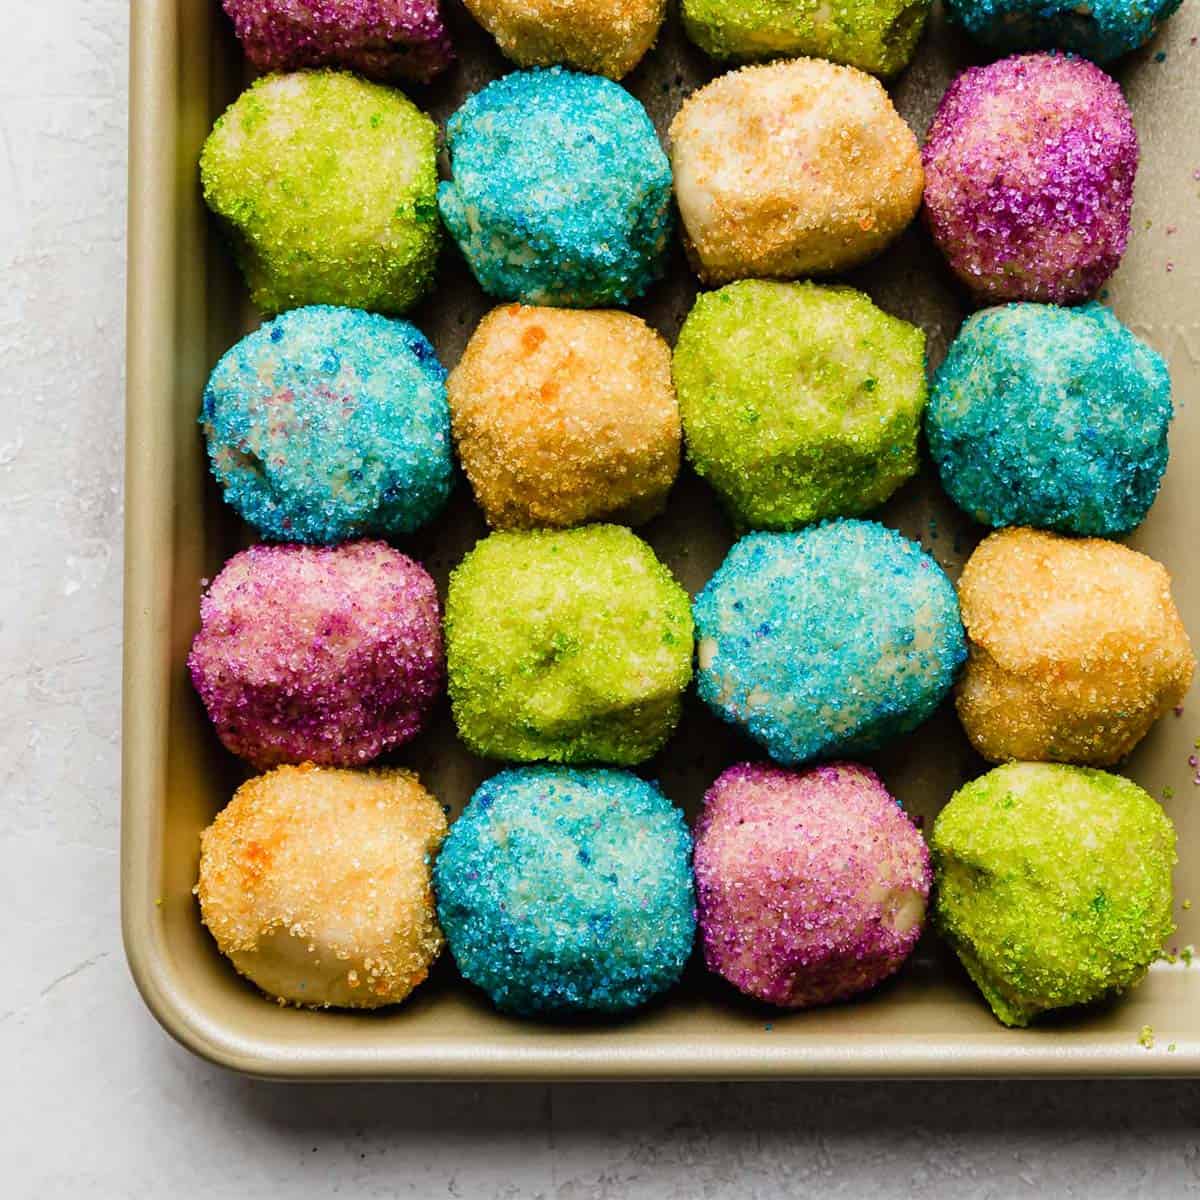 Sugar cookie dough balls coated in colored sugar.